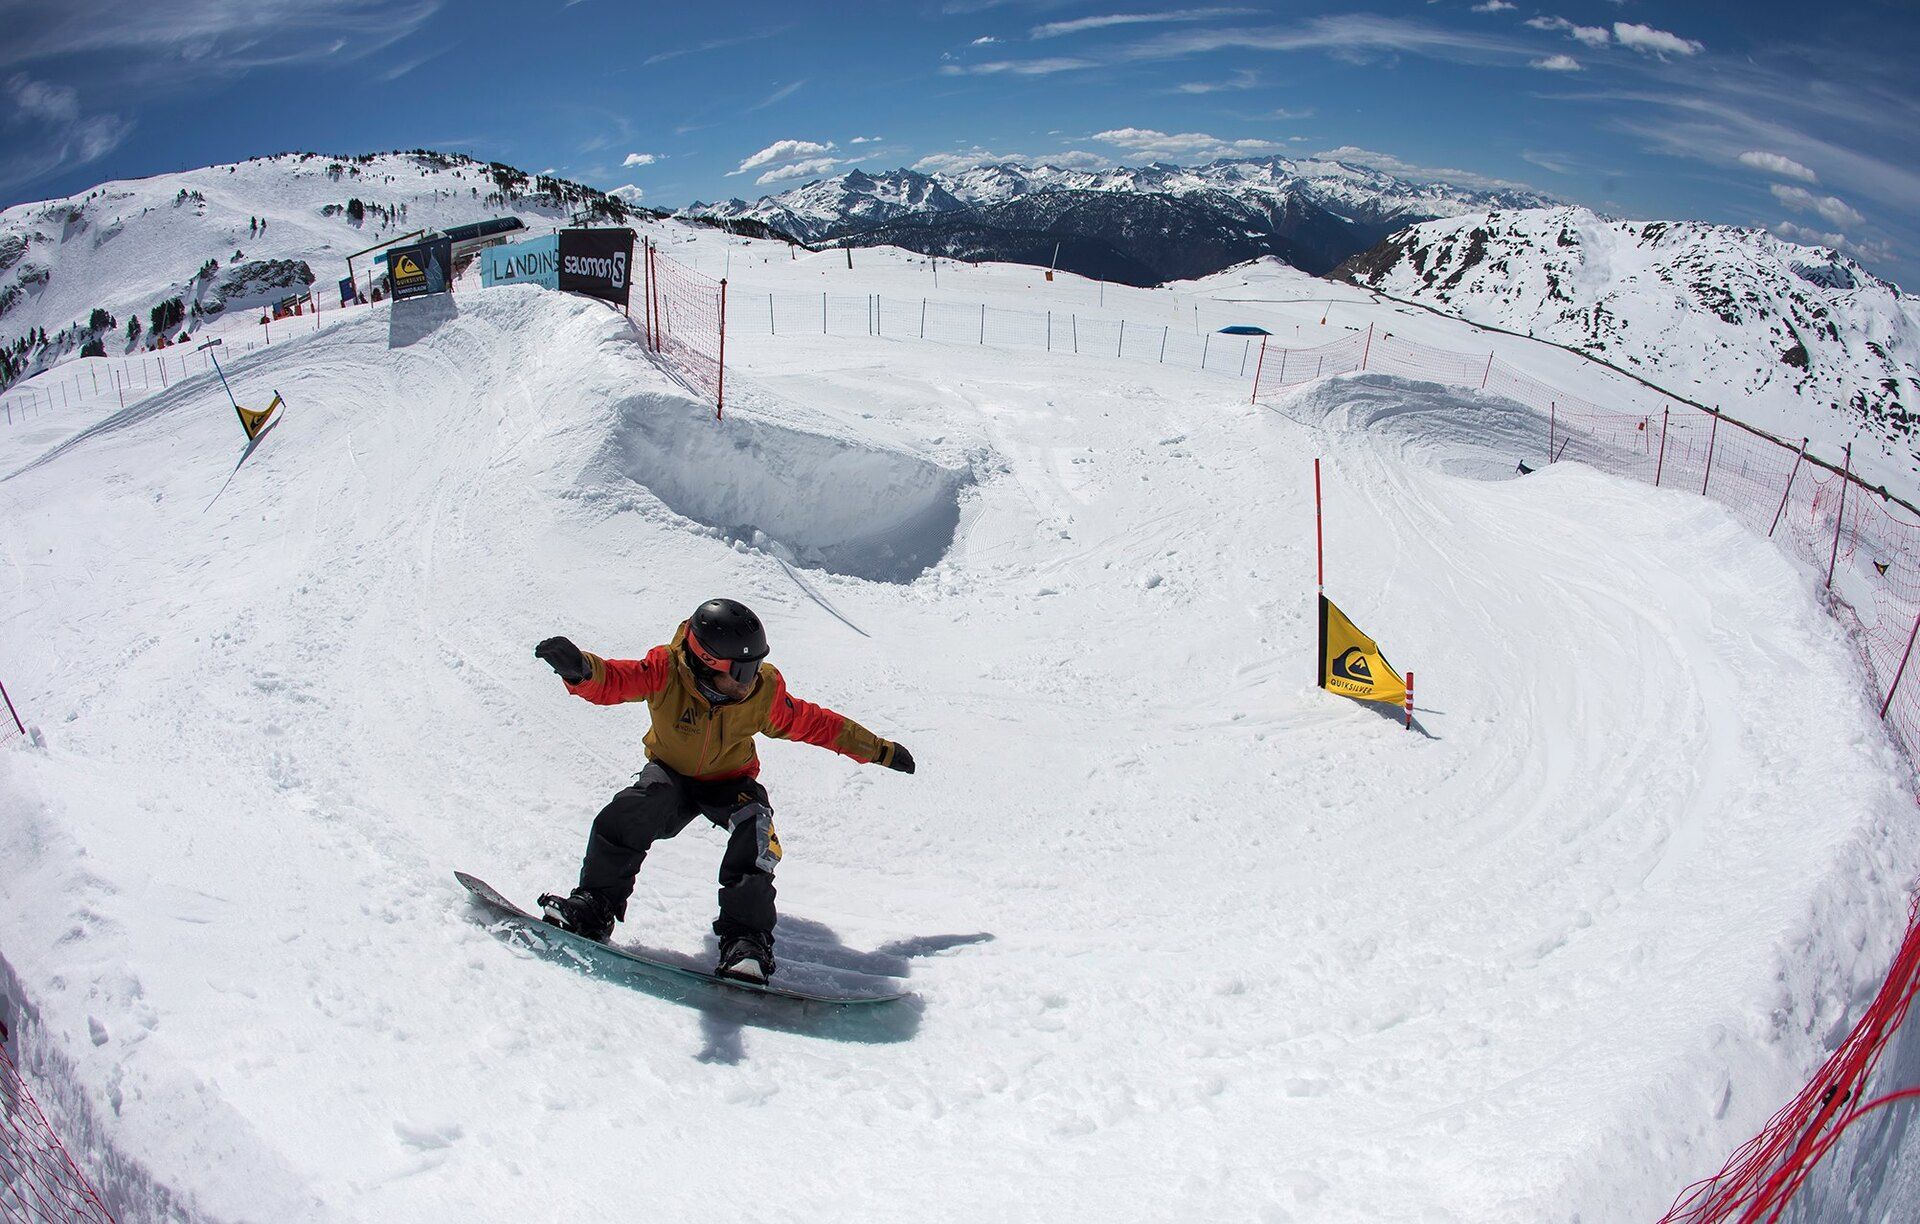 III Landing Snowboard Banked Slalom en Baqueira Beret - Noticias -  Nevasport.com